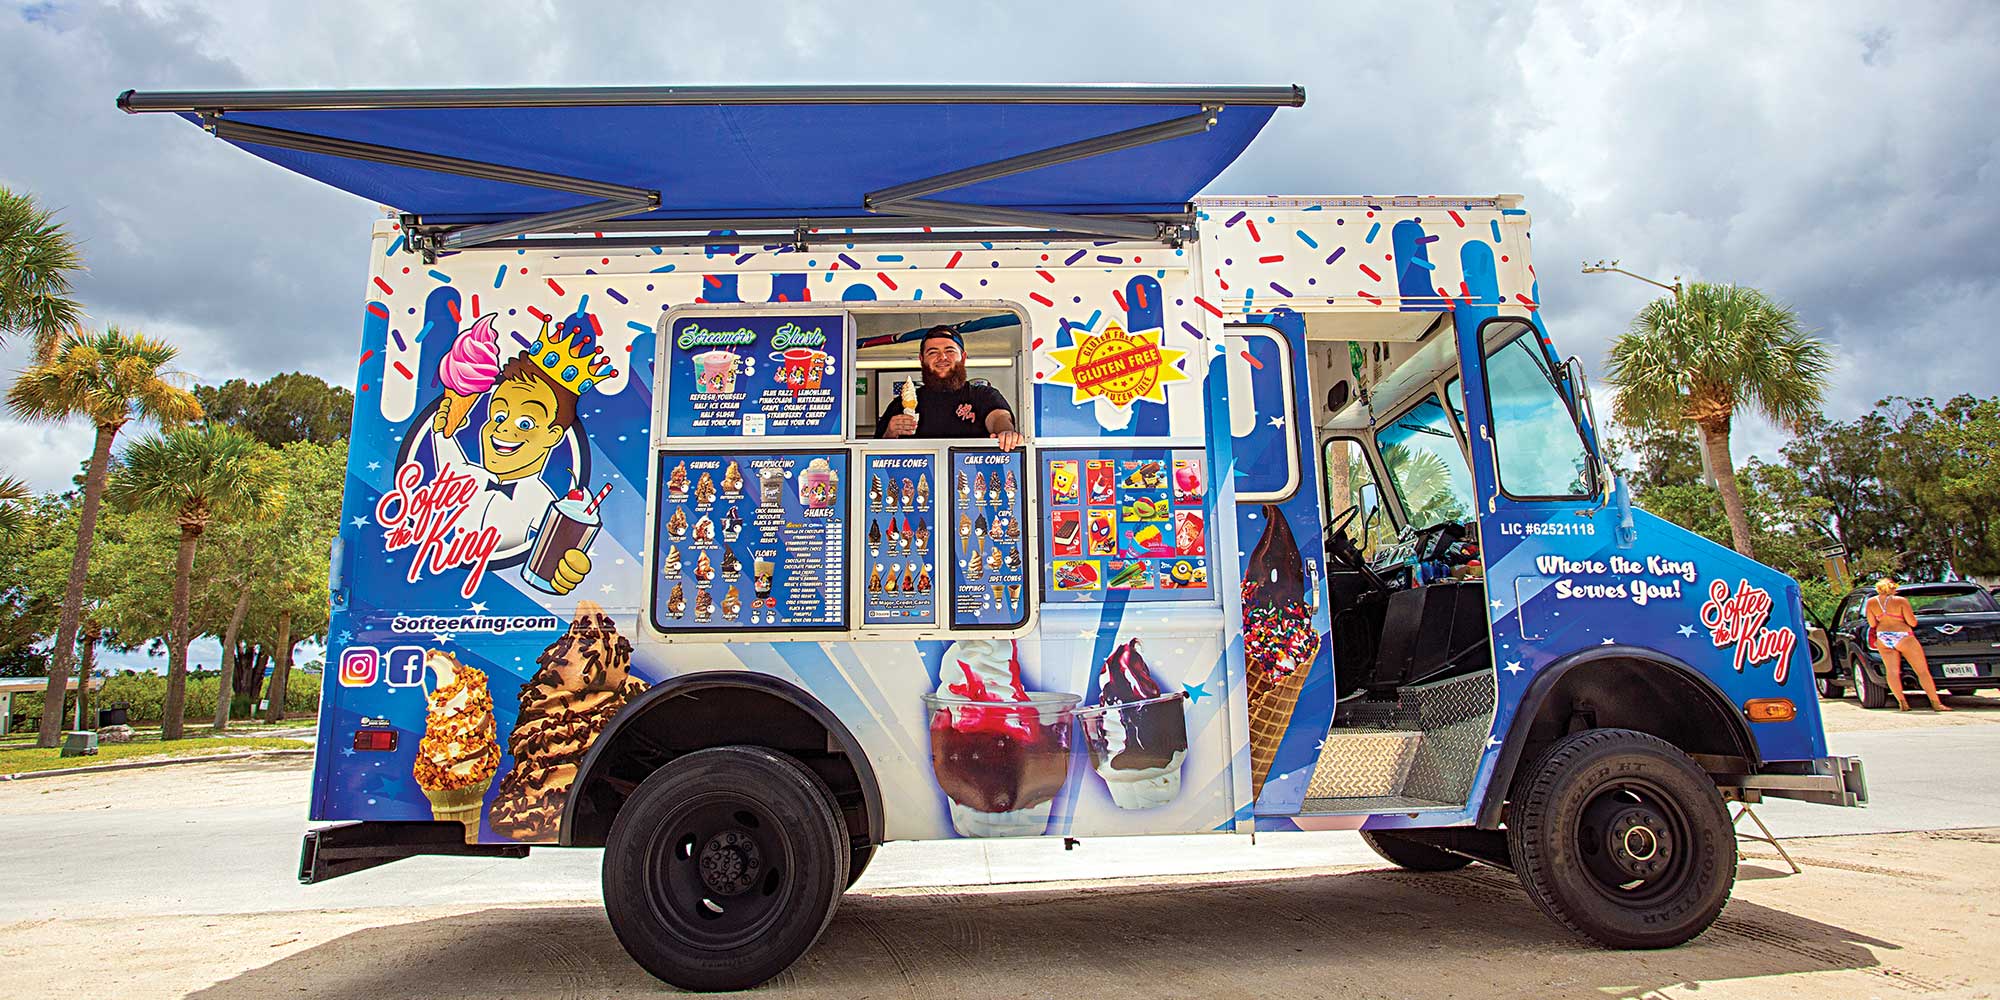 Ice-cream truck